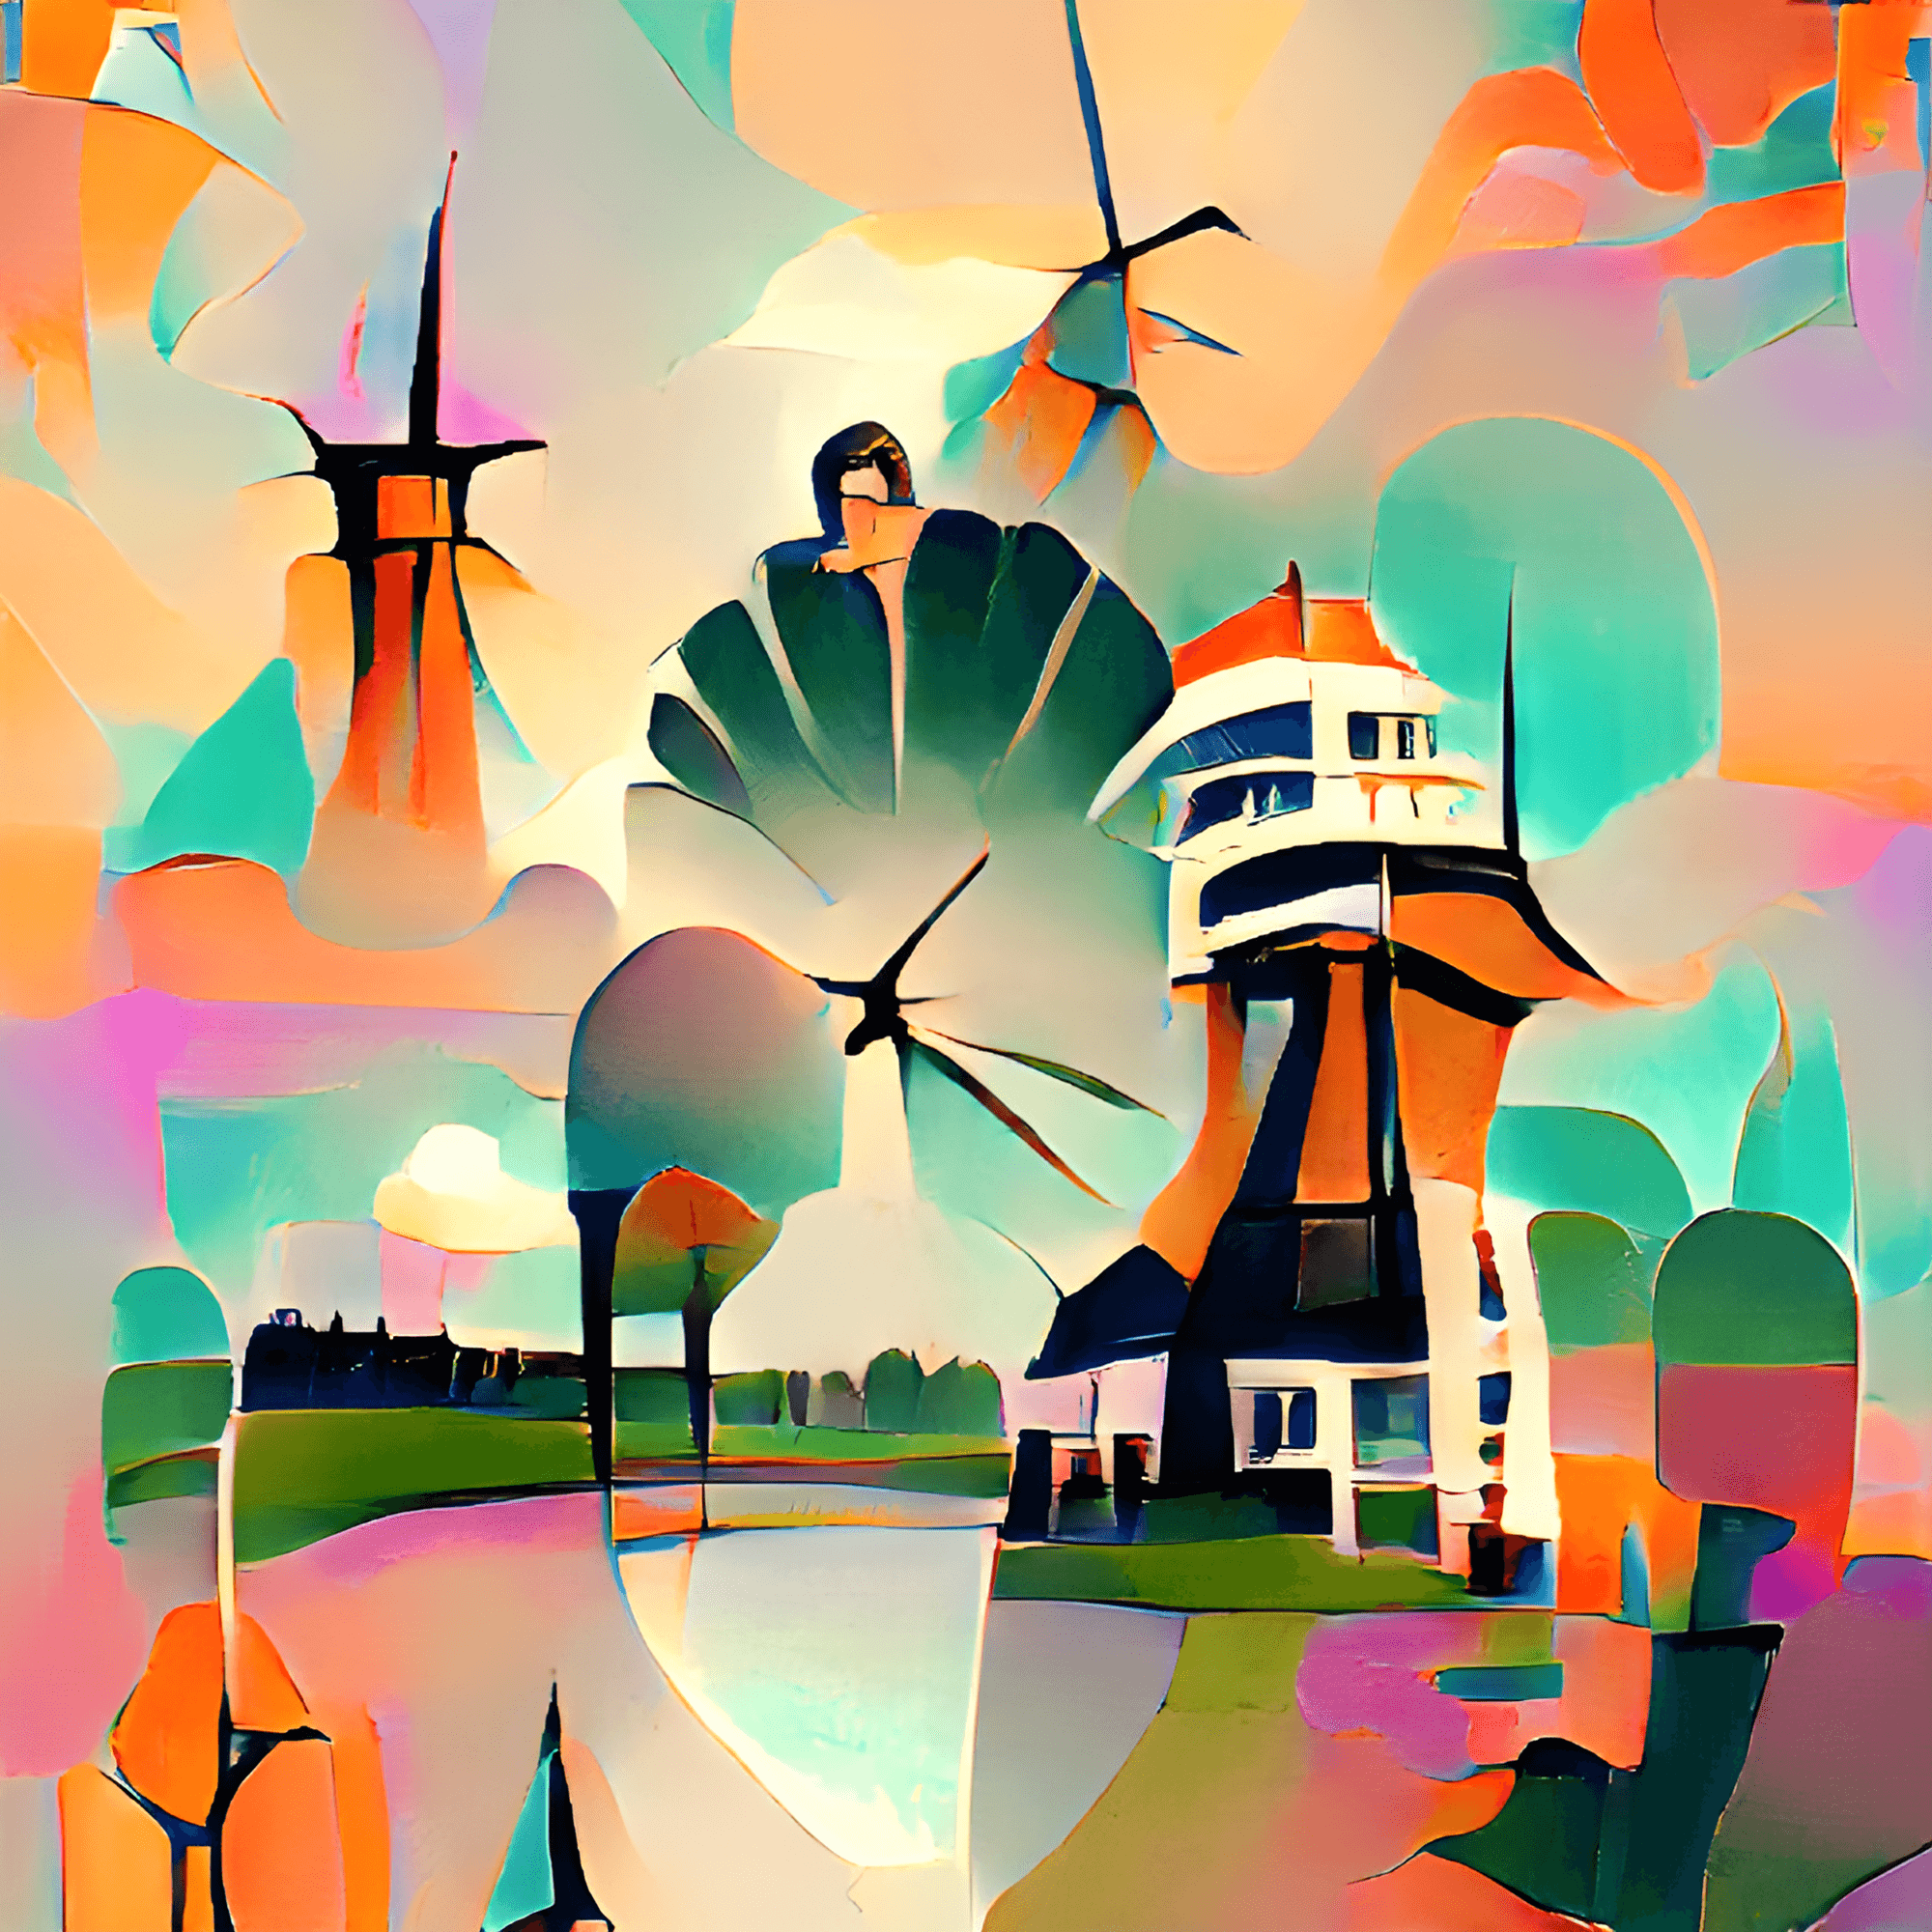 Amsterdam as Fantasy Land